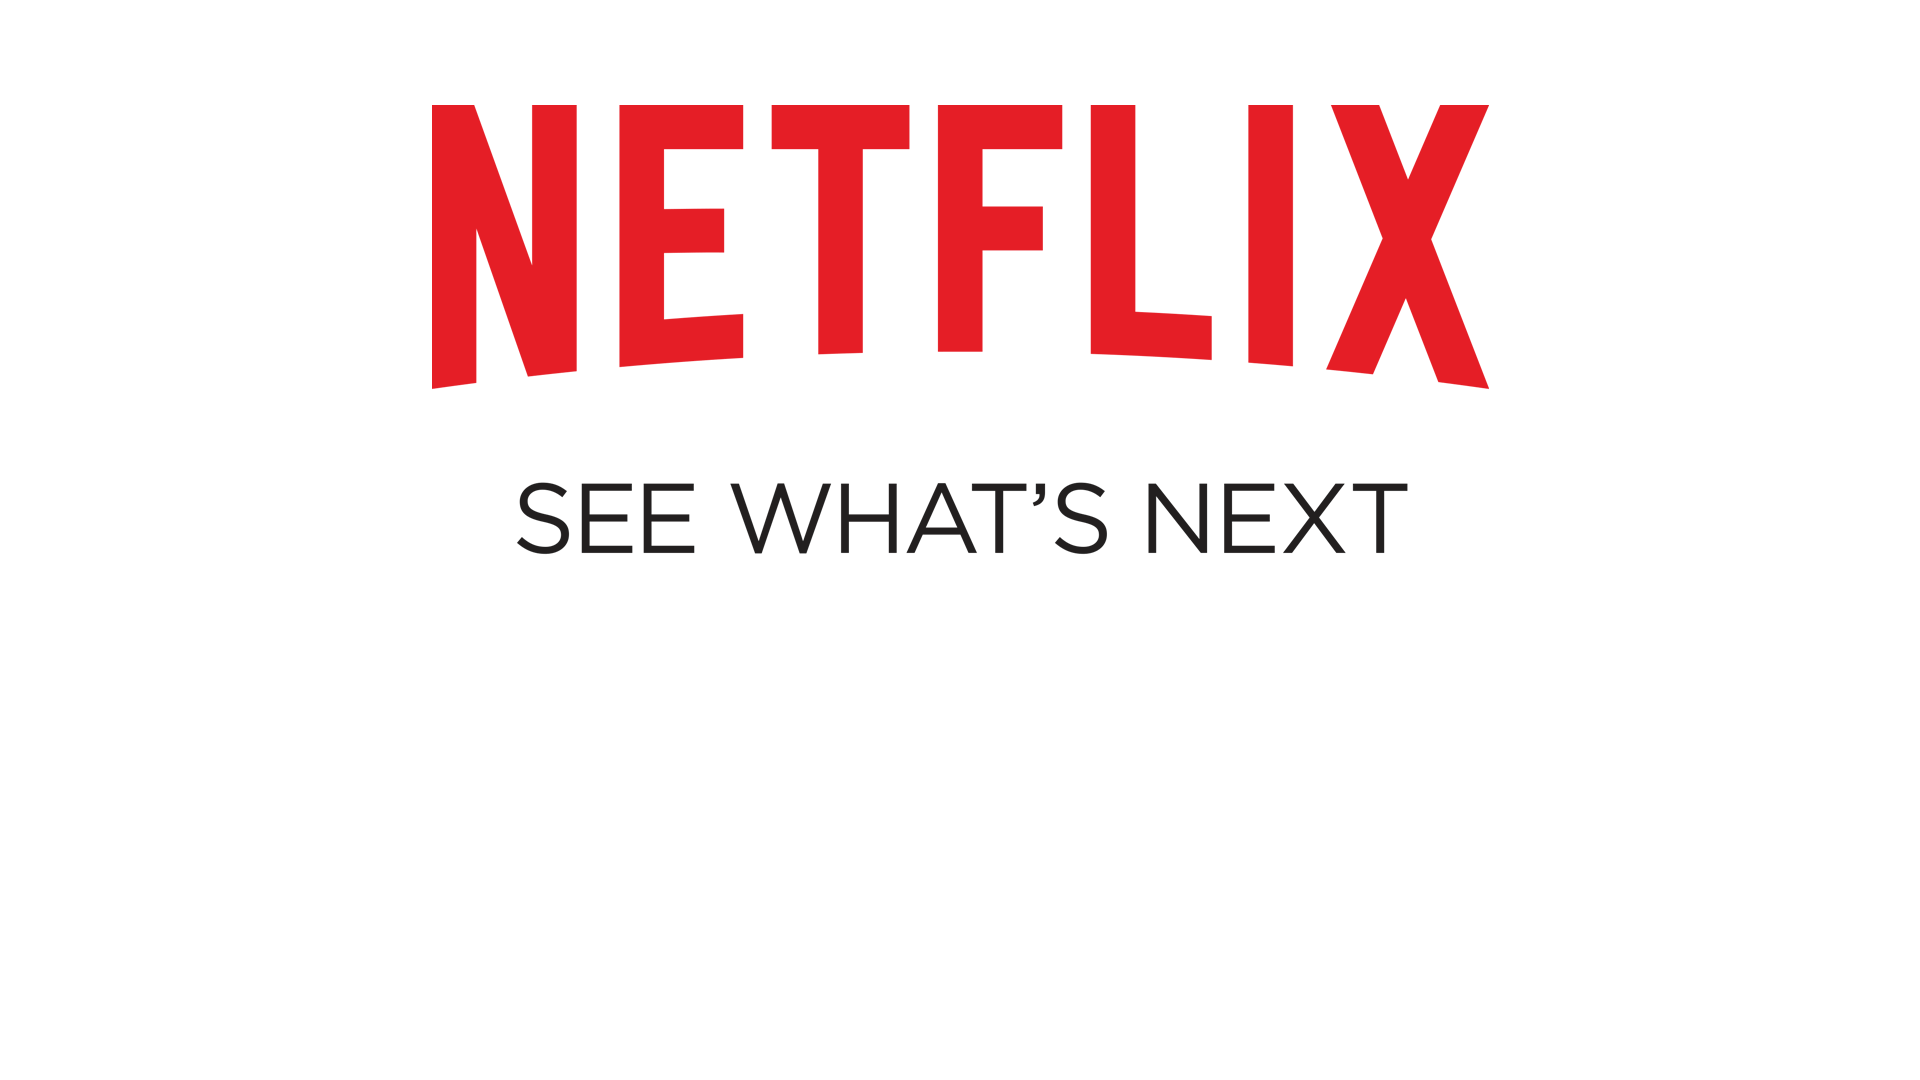 Next Netflix Logo - Brand New: New Global Identity for Netflix